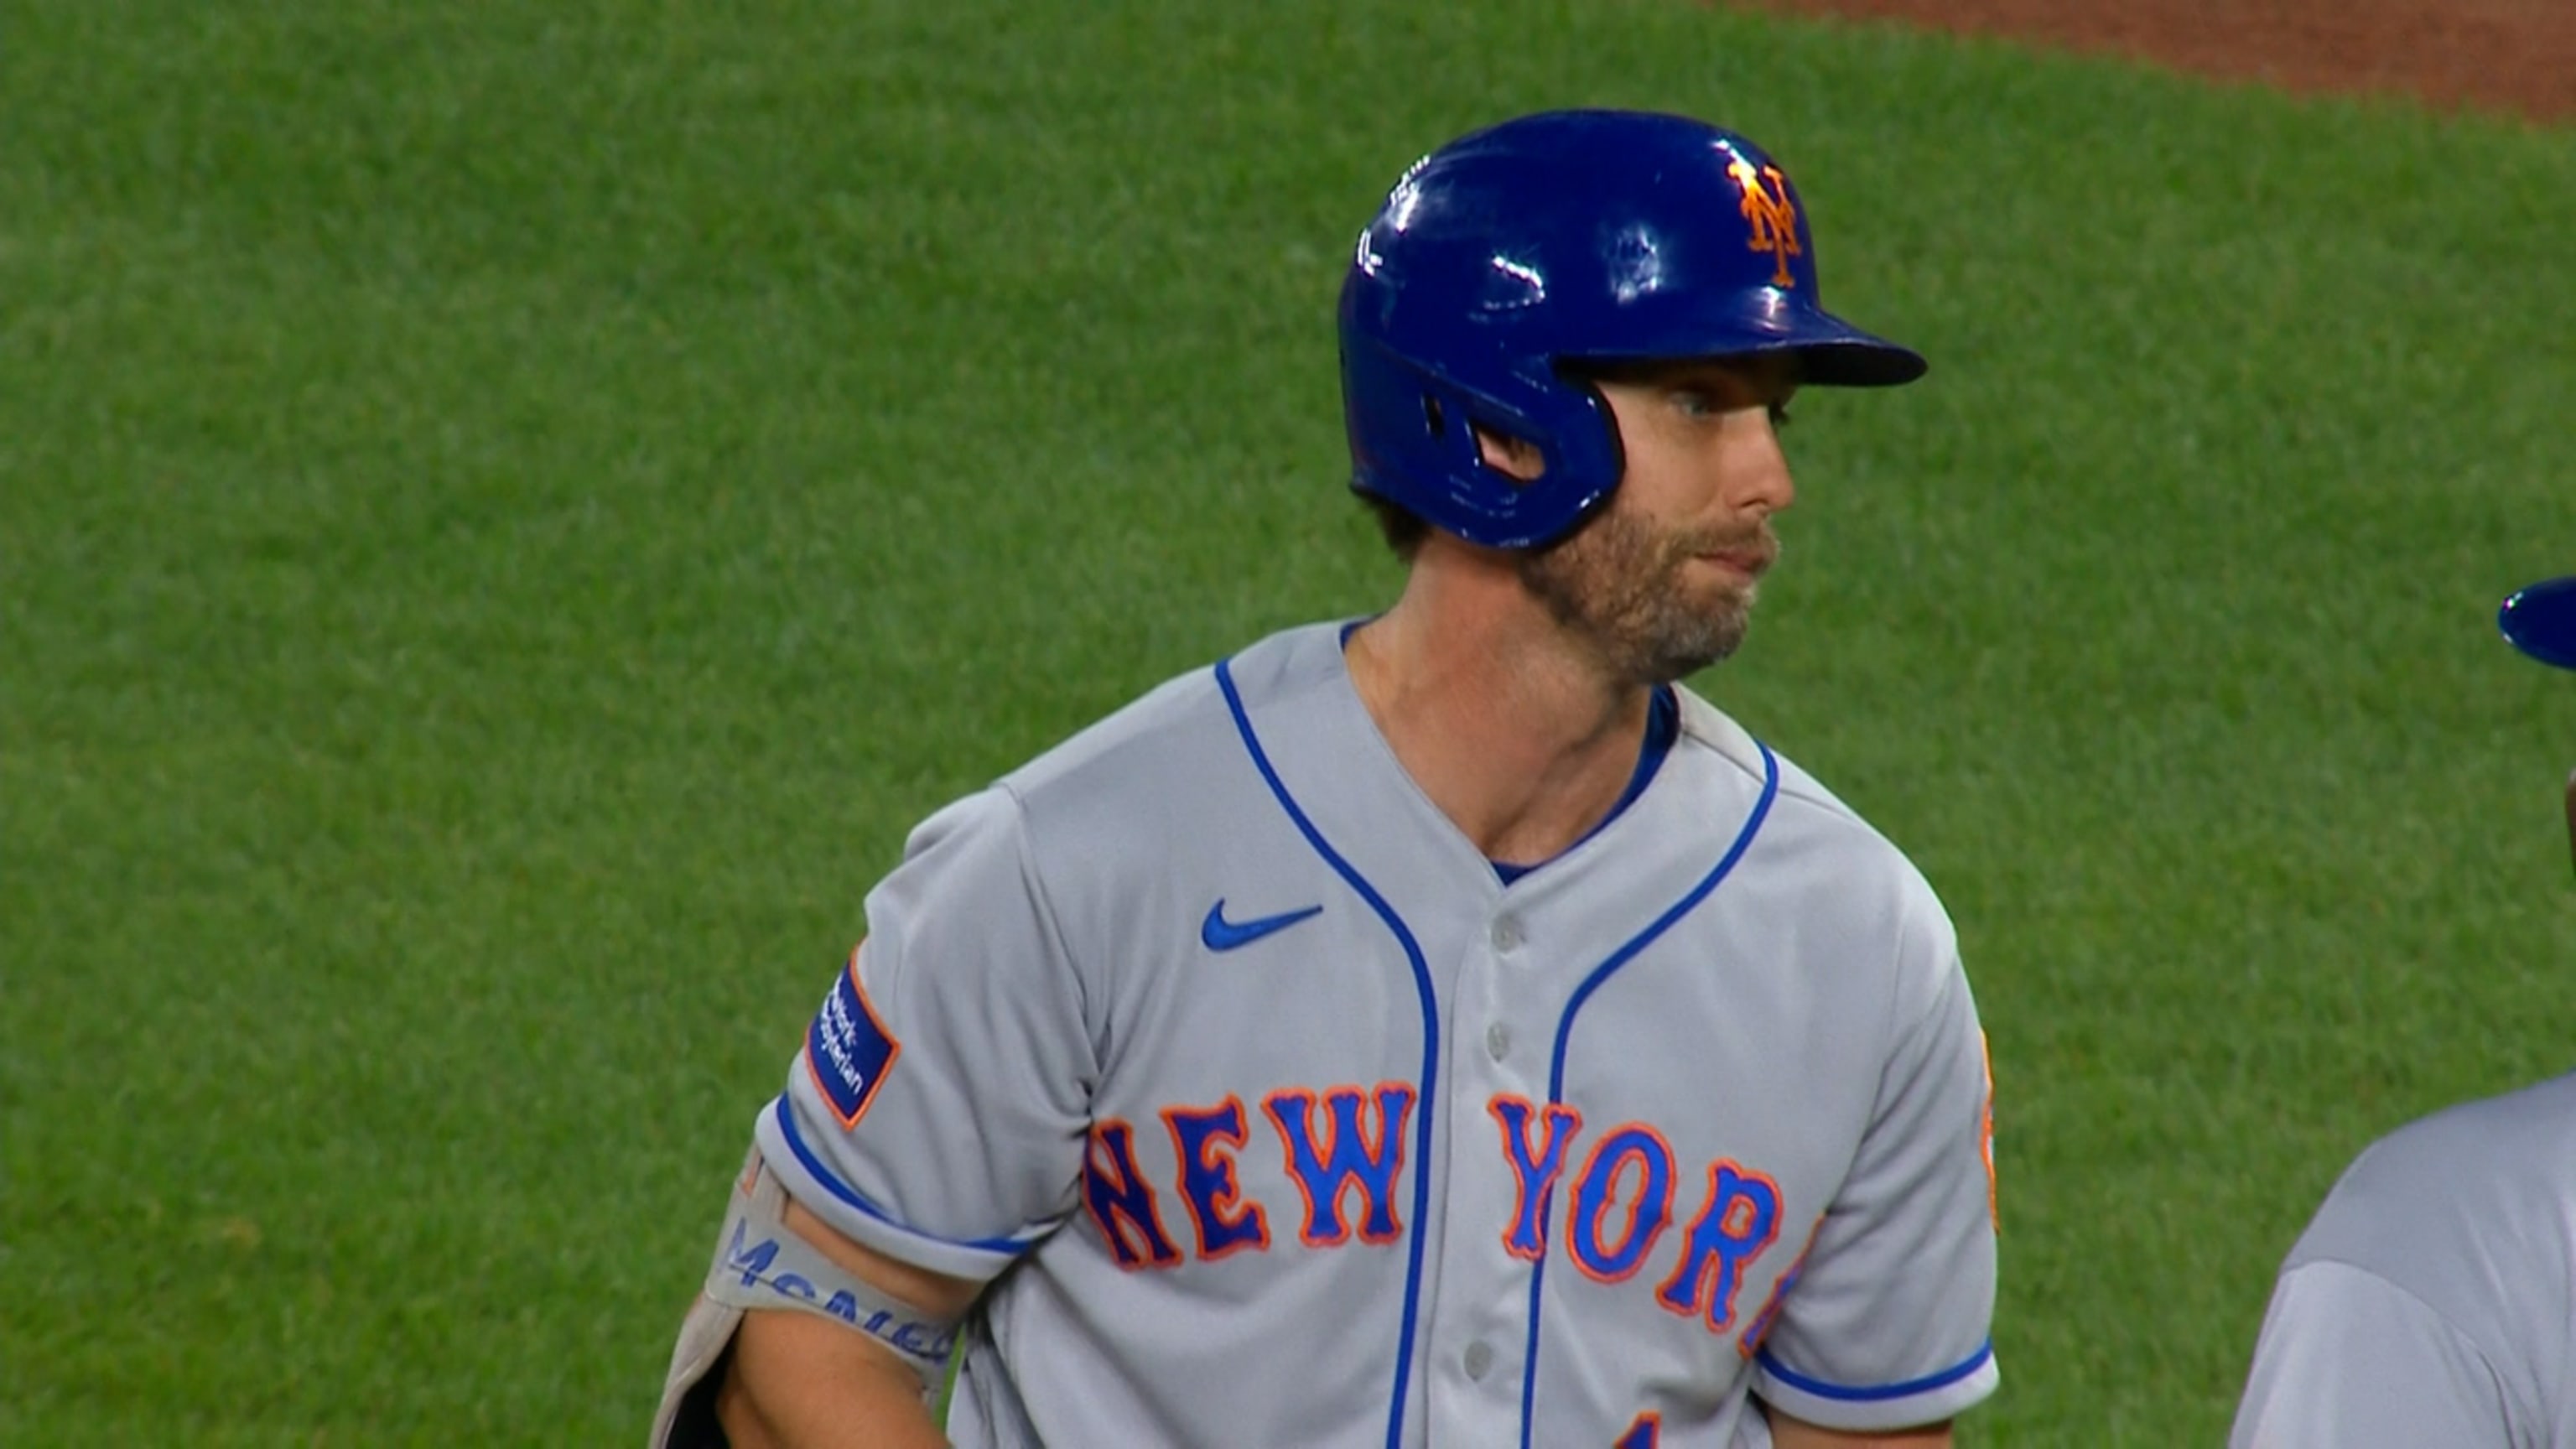 NY Mets: Jeff McNeil two-run single supplies three runs after error